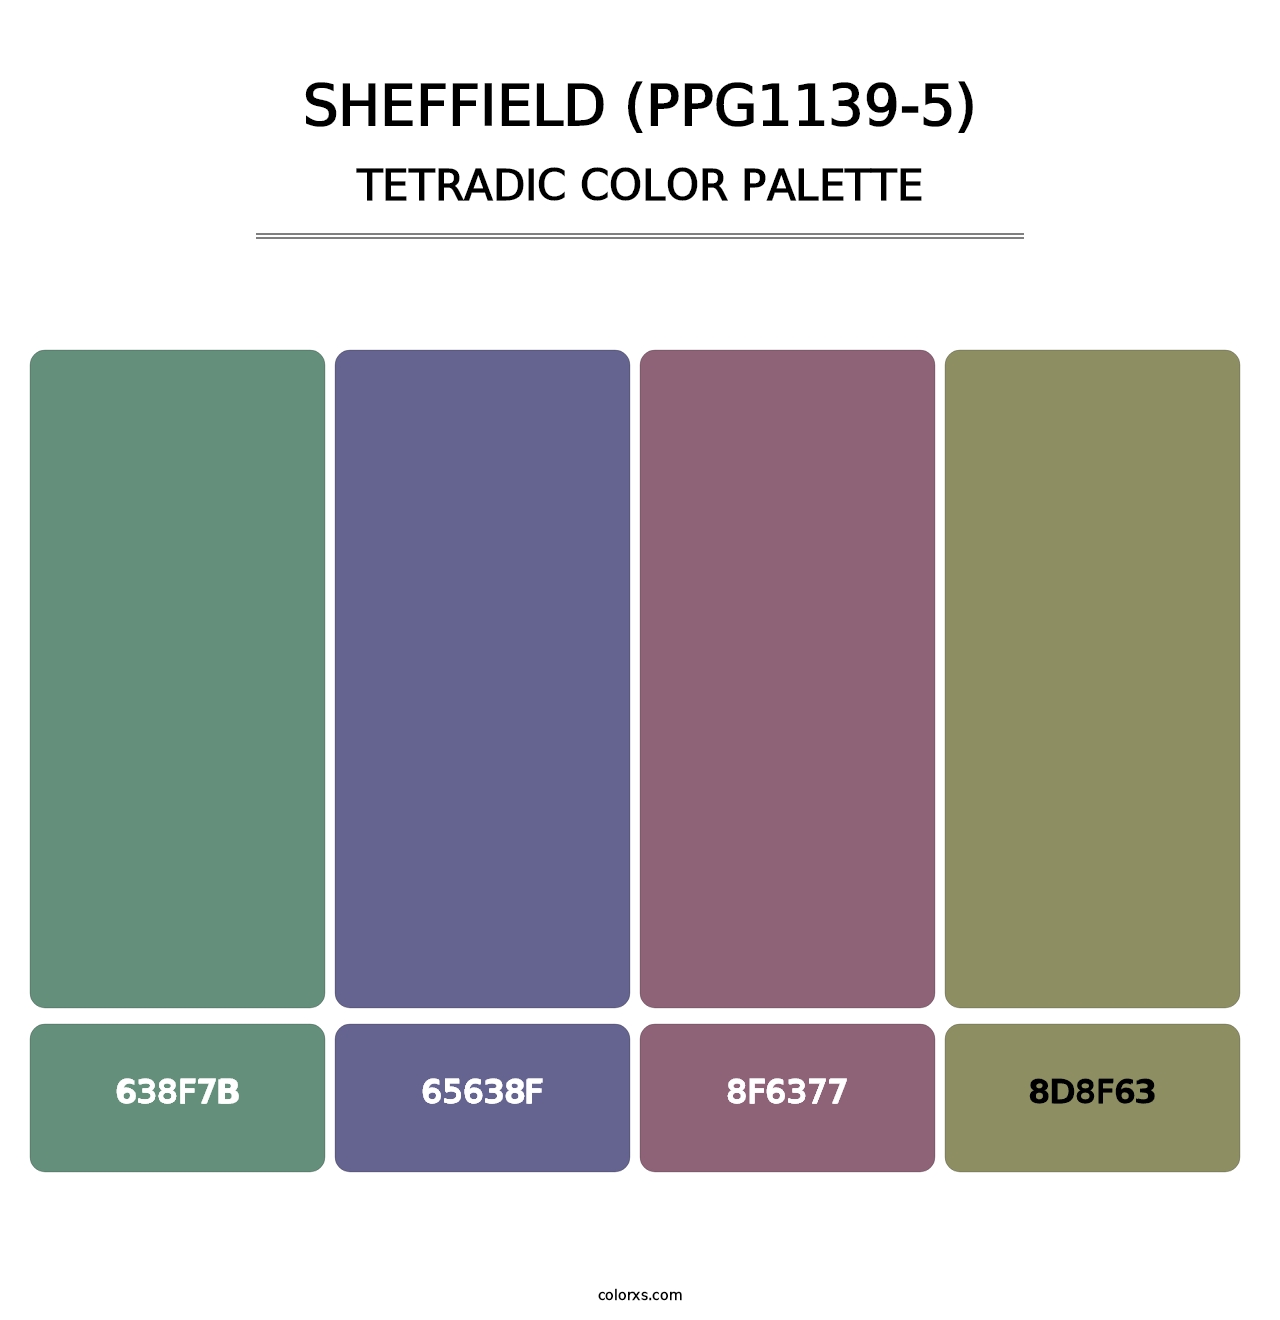 Sheffield (PPG1139-5) - Tetradic Color Palette